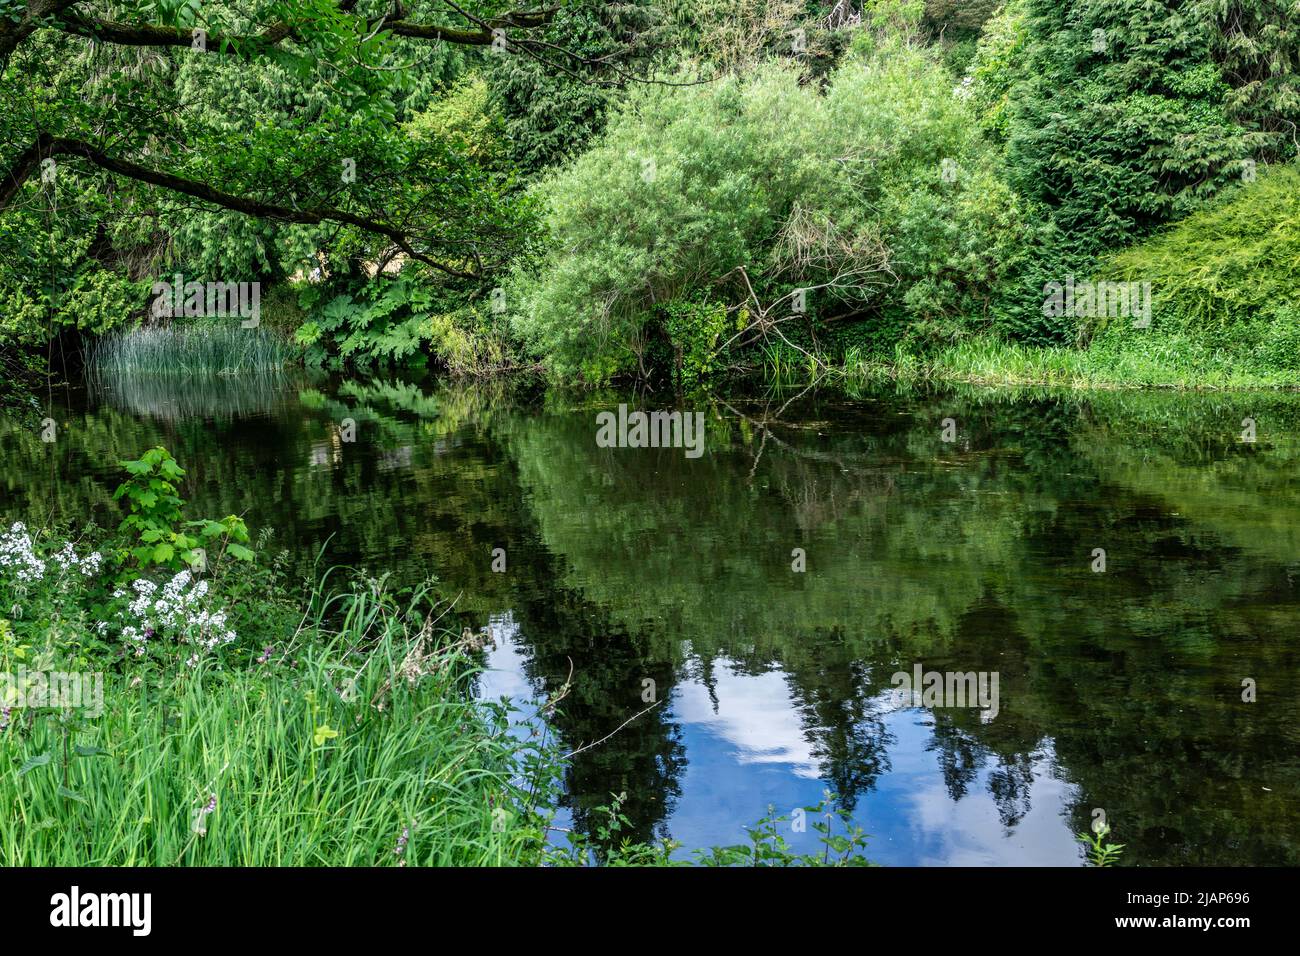 The lush green vegetation bordering the River Liffey near Palmerstown in Dublin, Ireland. Stock Photo